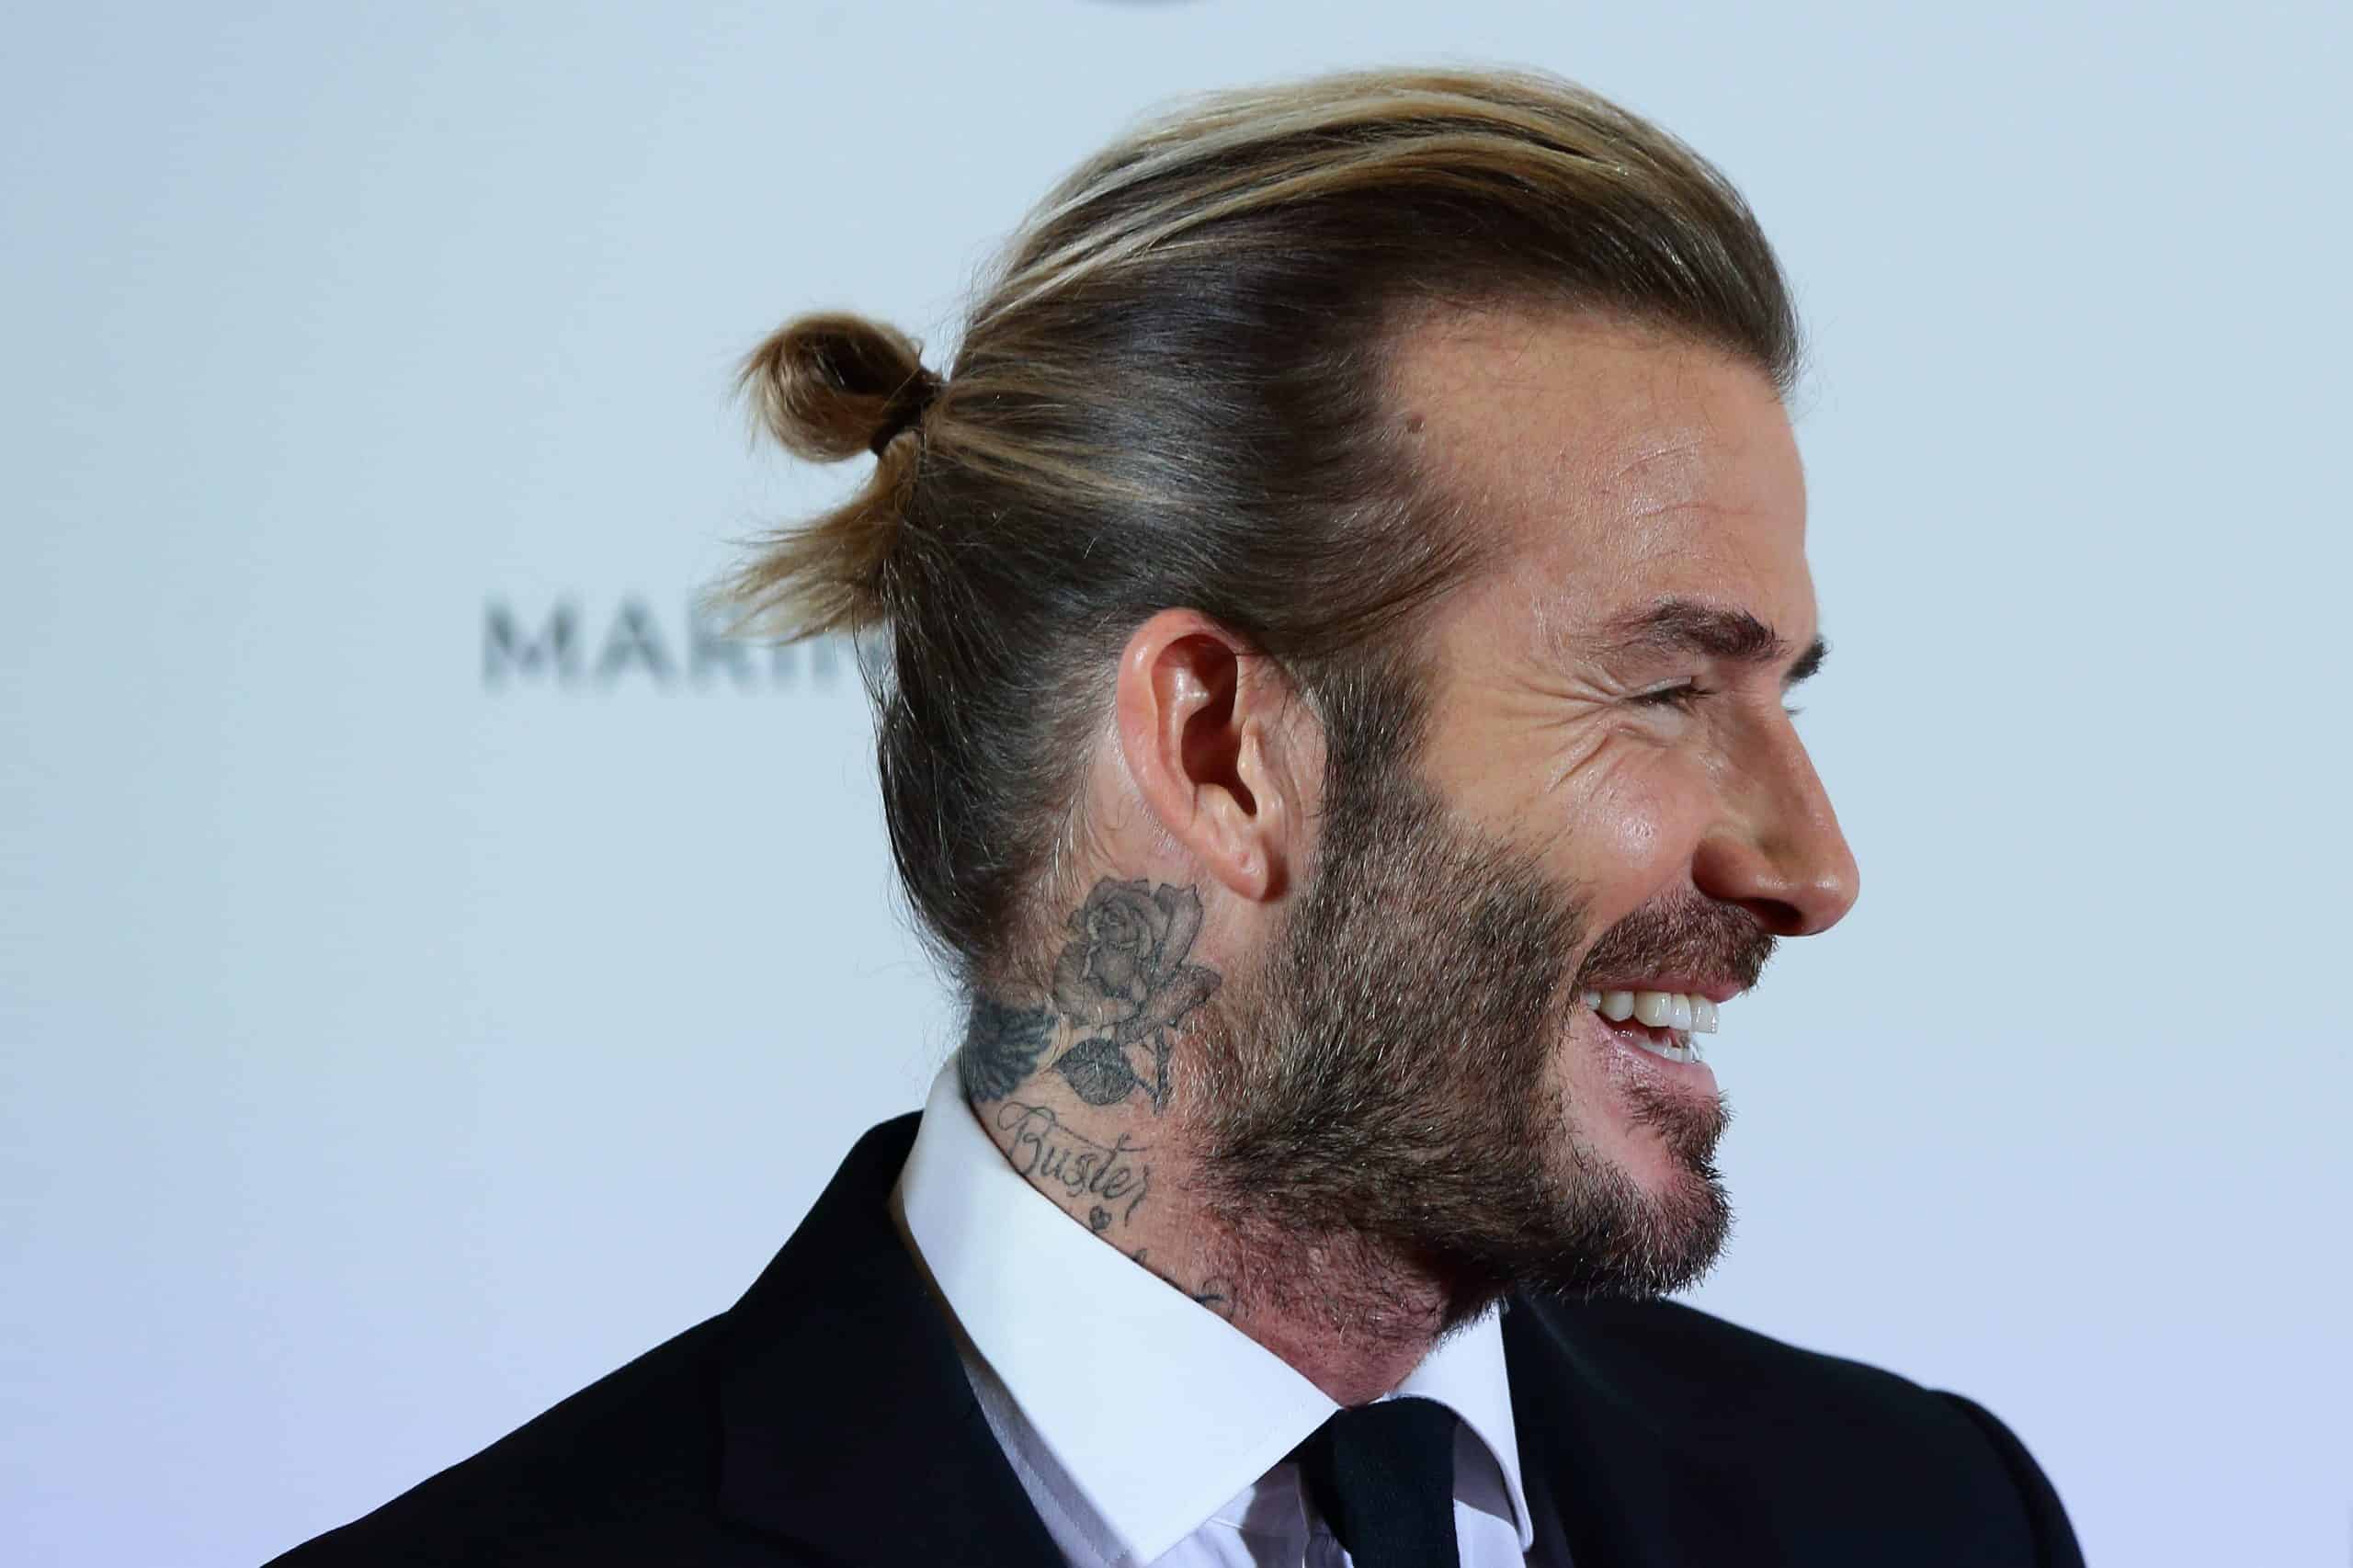 2017's Top Men's Hairstyles: 120 Best Haircuts for Men, Short to Long |  David beckham hairstyle, Beckham haircut, Beckham hair